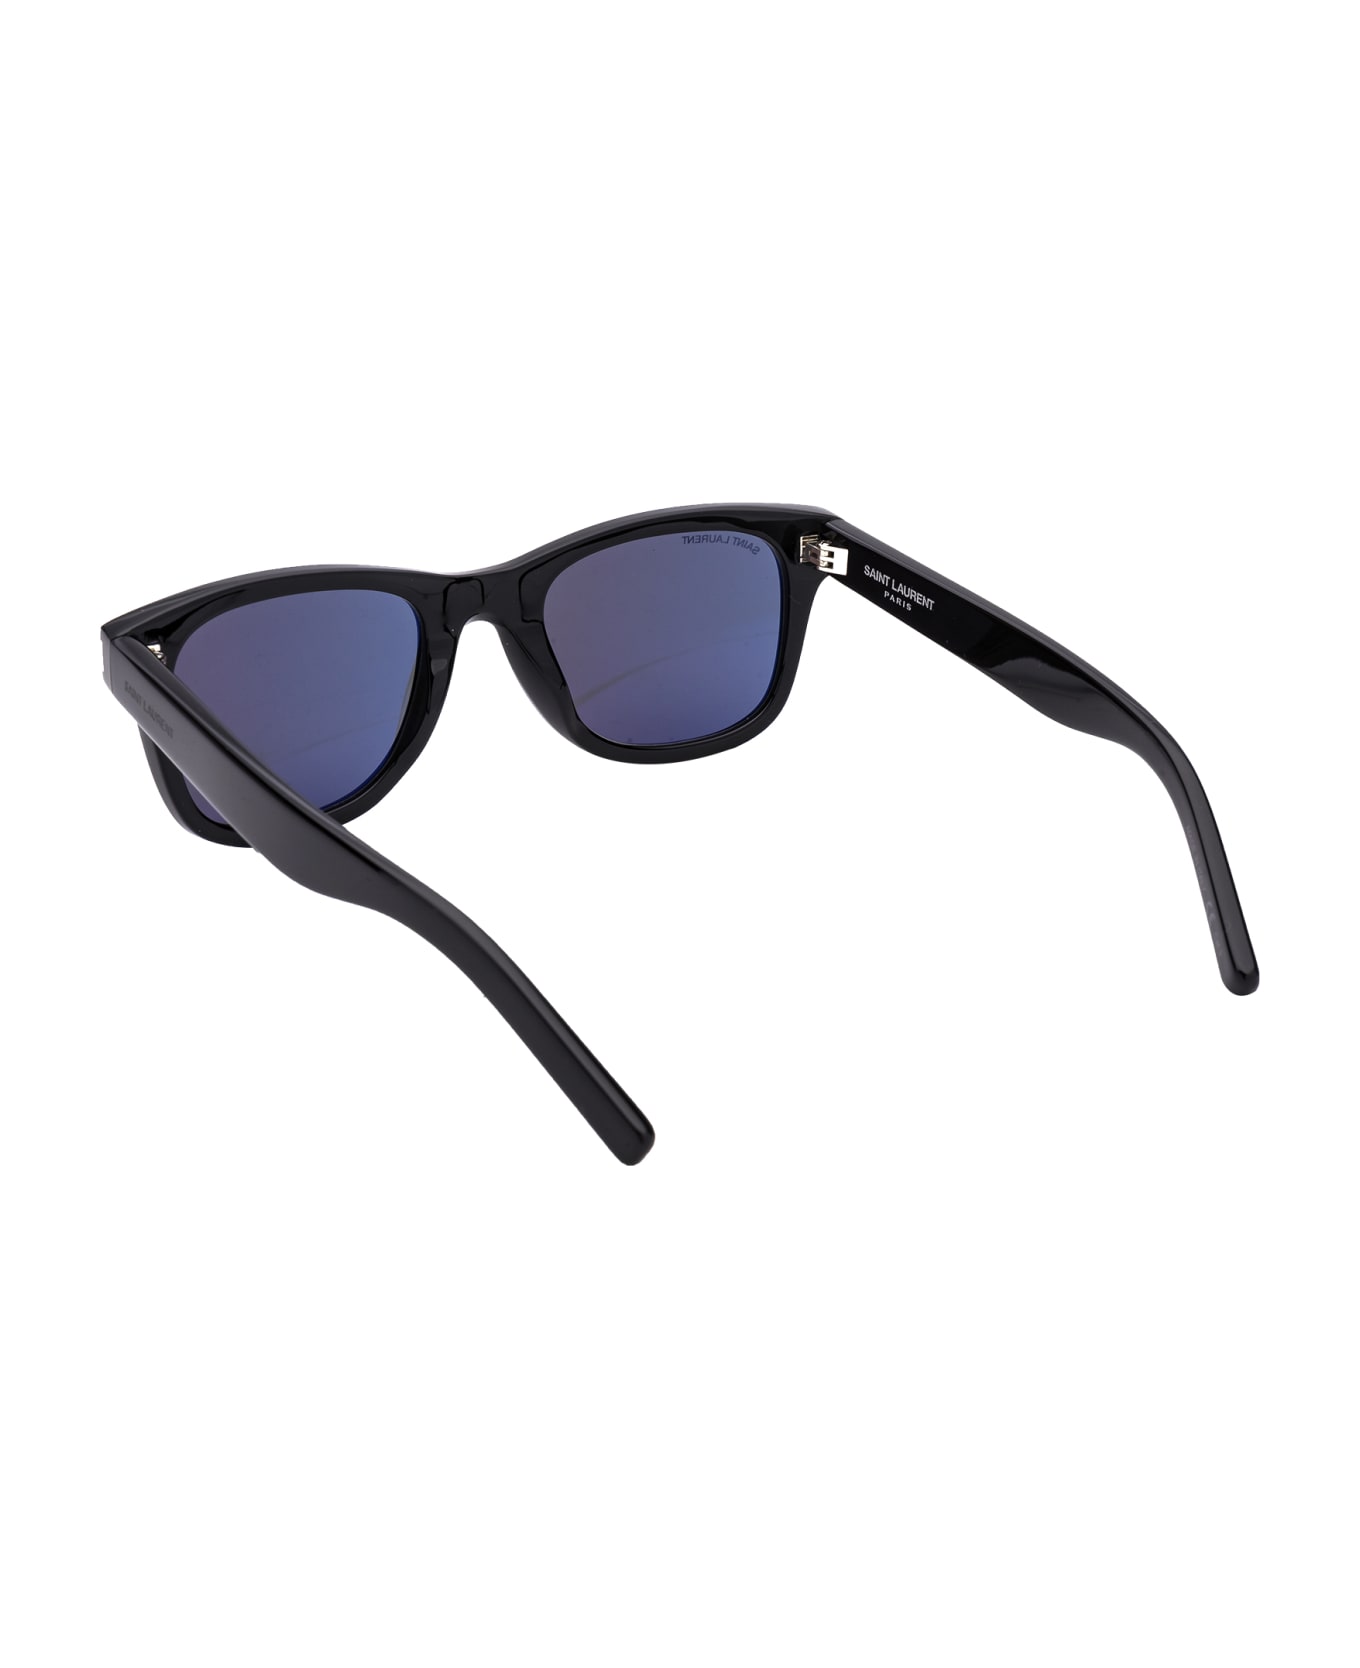 Saint Laurent Eyewear Sl 51 Sunglasses - 002 Sunglasses LOVE MOSCHINO MOL031 S Black 807